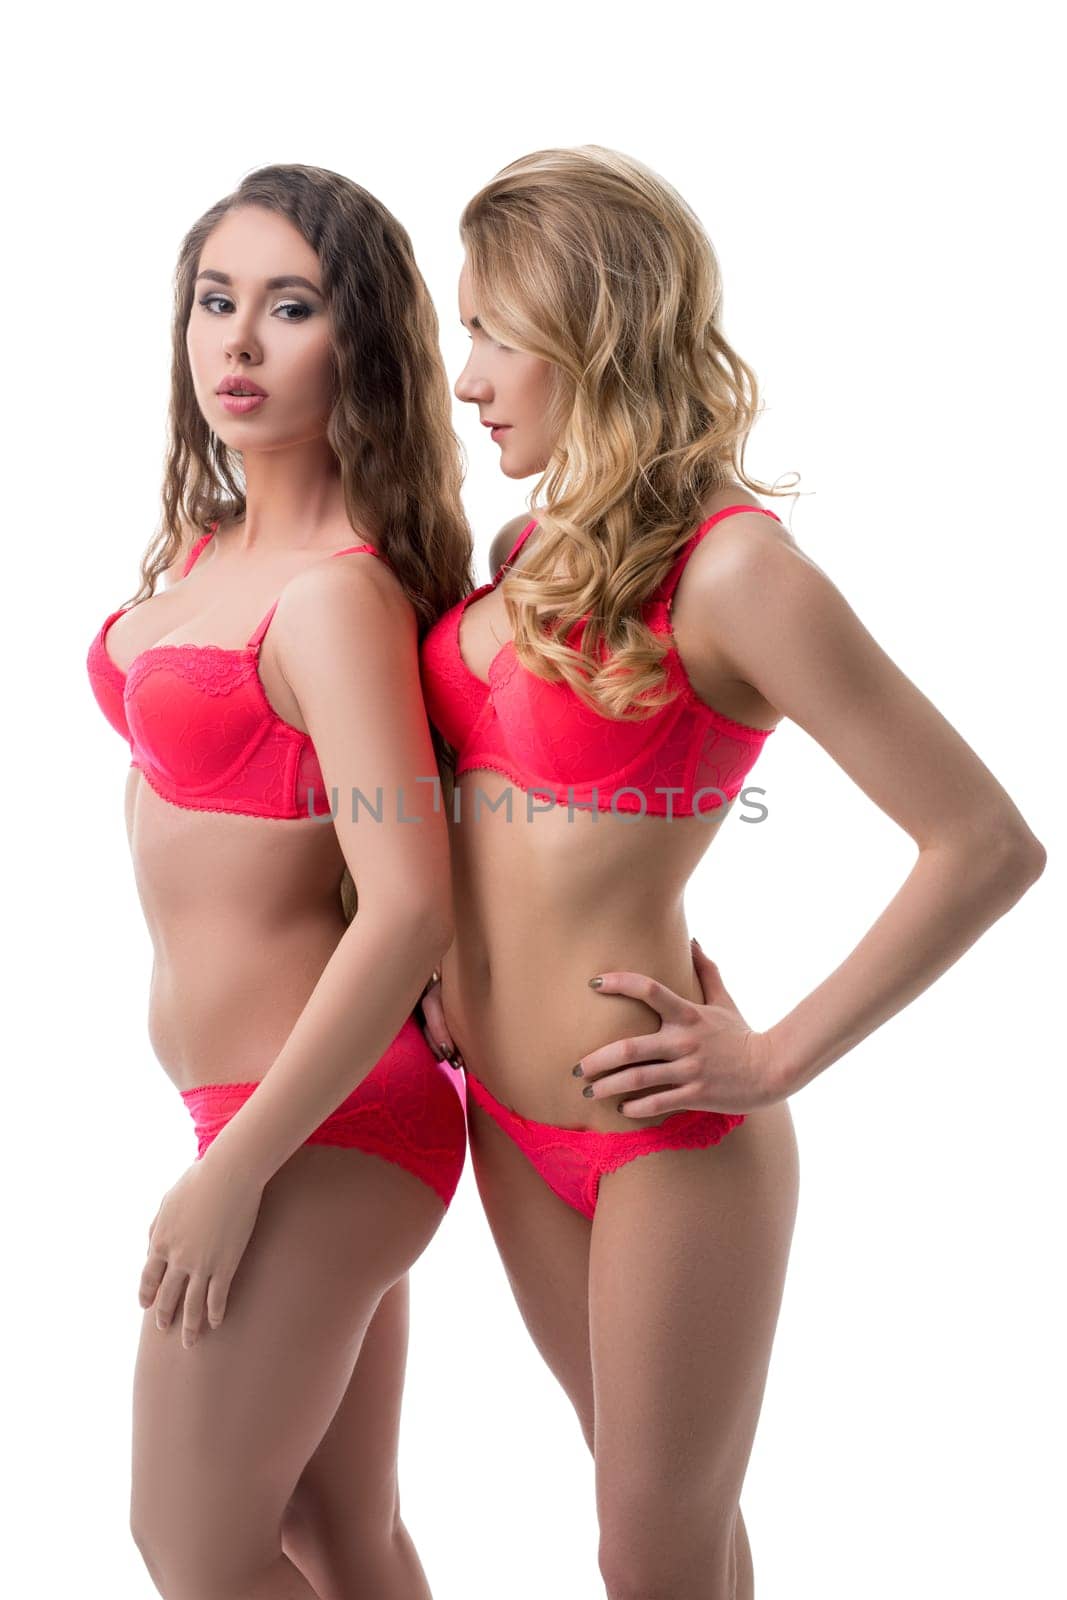 Two beautiful girls advertise stylish underwear by rivertime